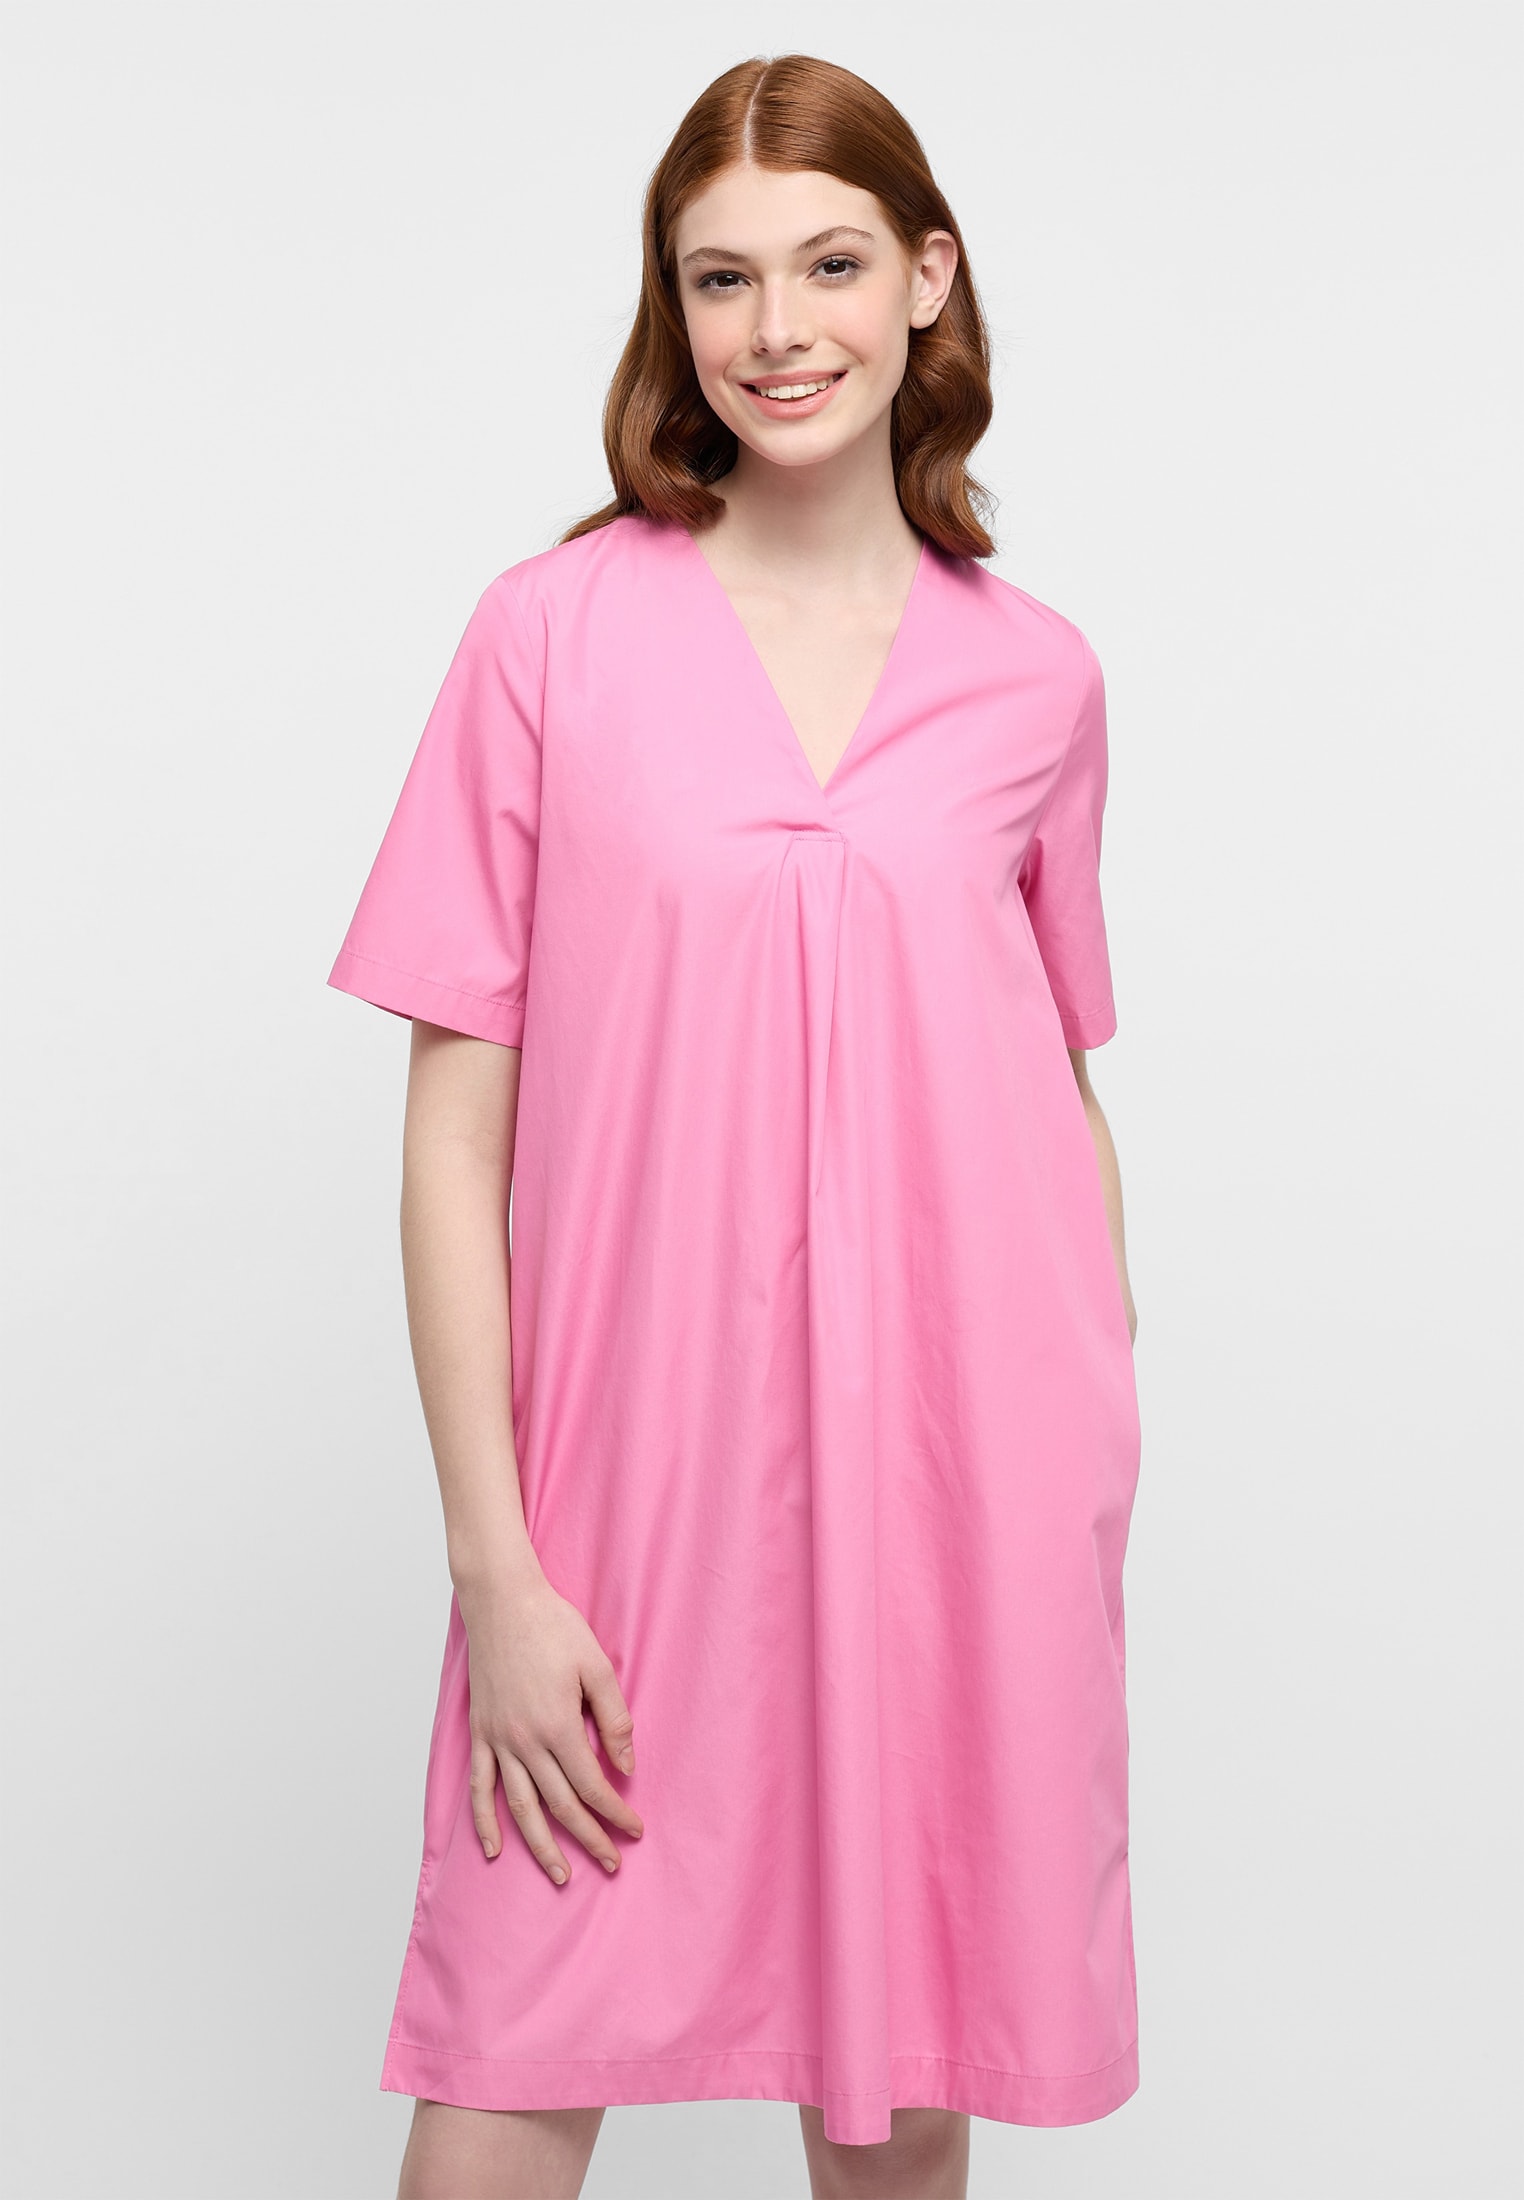 Shirt dress in pink plain 34 | | short 2DR00211-15-21-34-1/2 | sleeve pink 